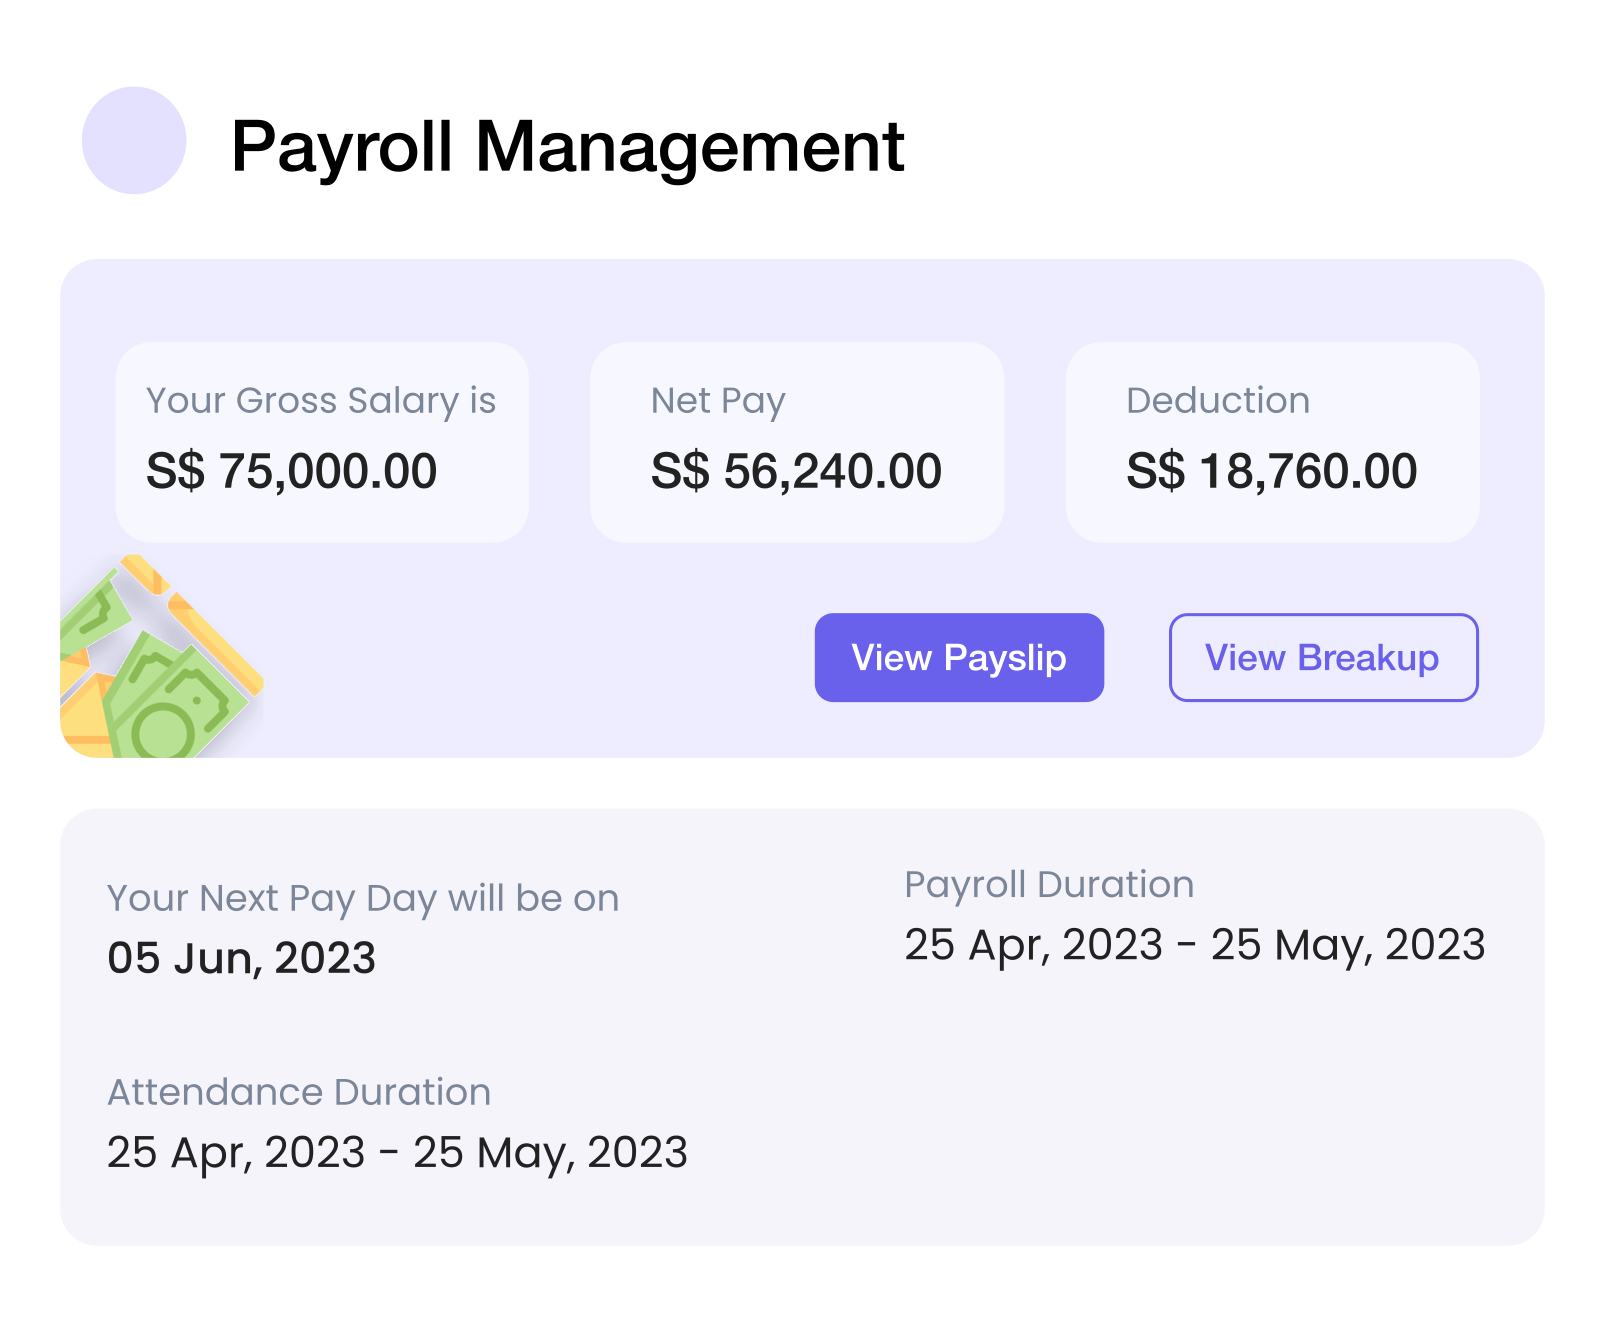 Payroll Management Dashboard of Akrivia HCM Singapore